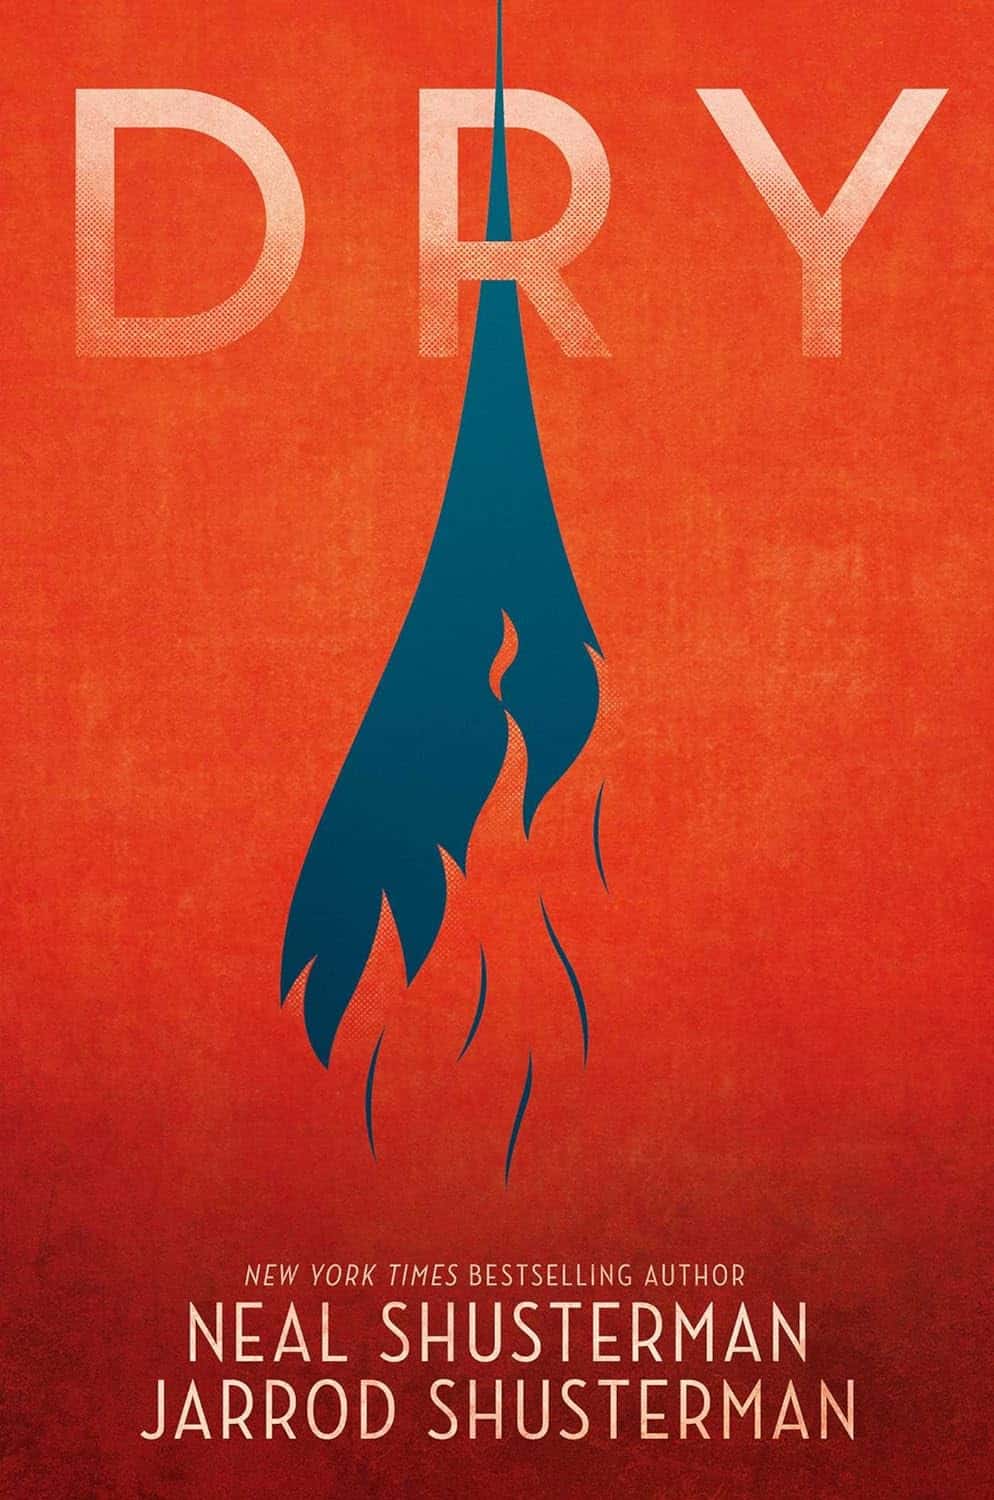 Dry, by Neal Shusterman